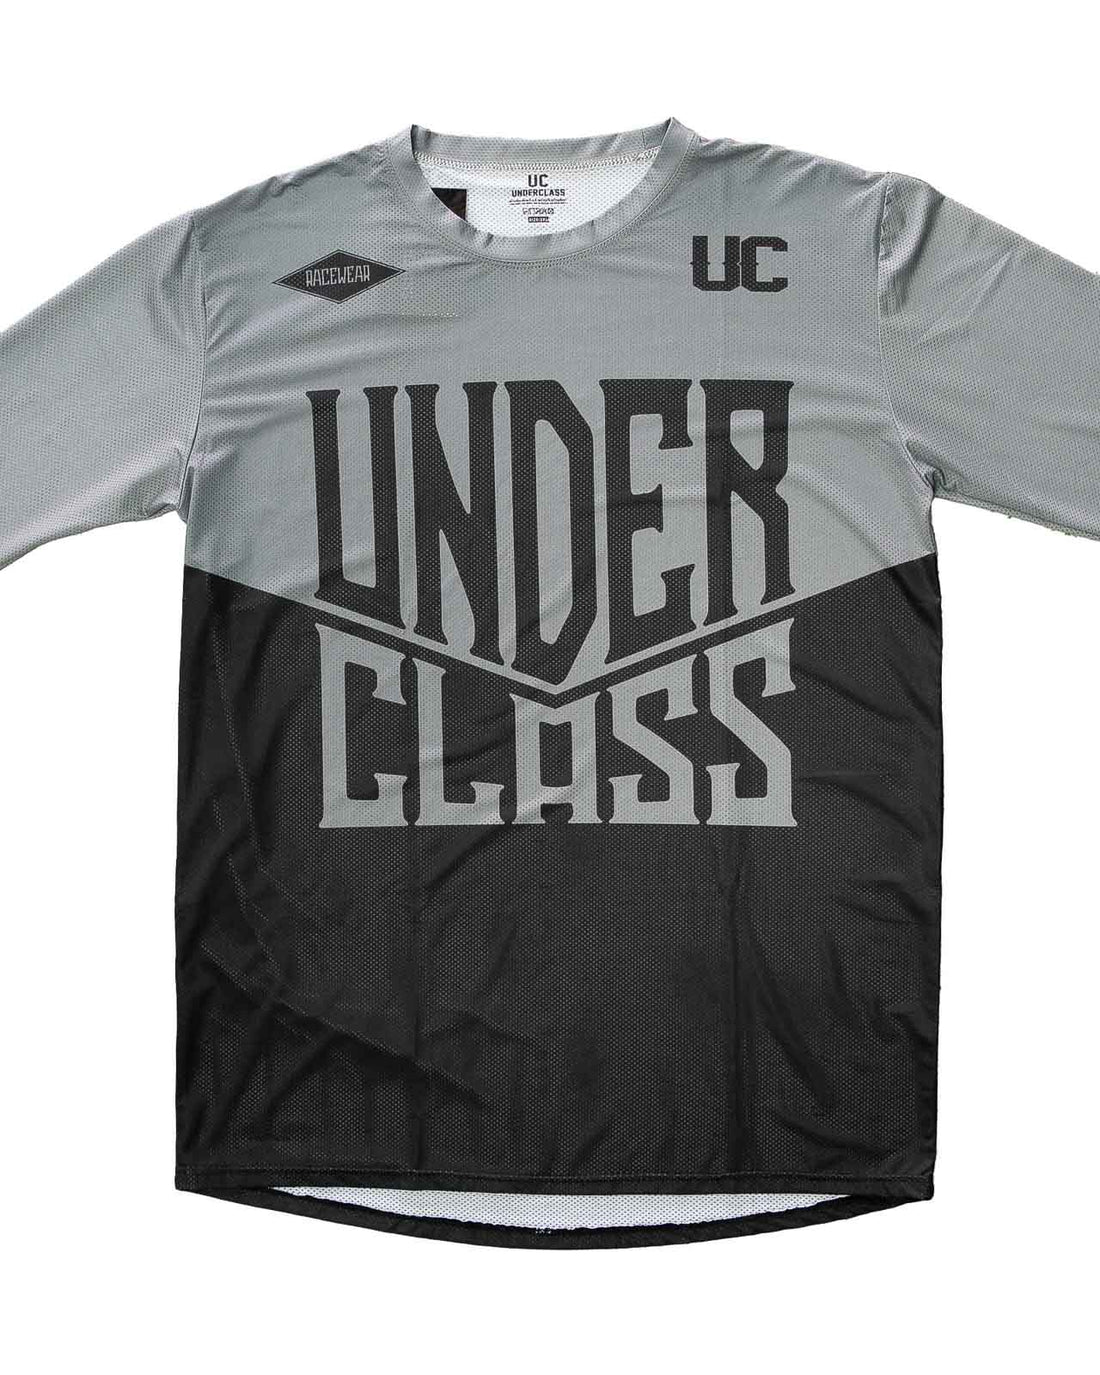 Underclass MX Air Jersey - Long Sleeve - Grey / Black